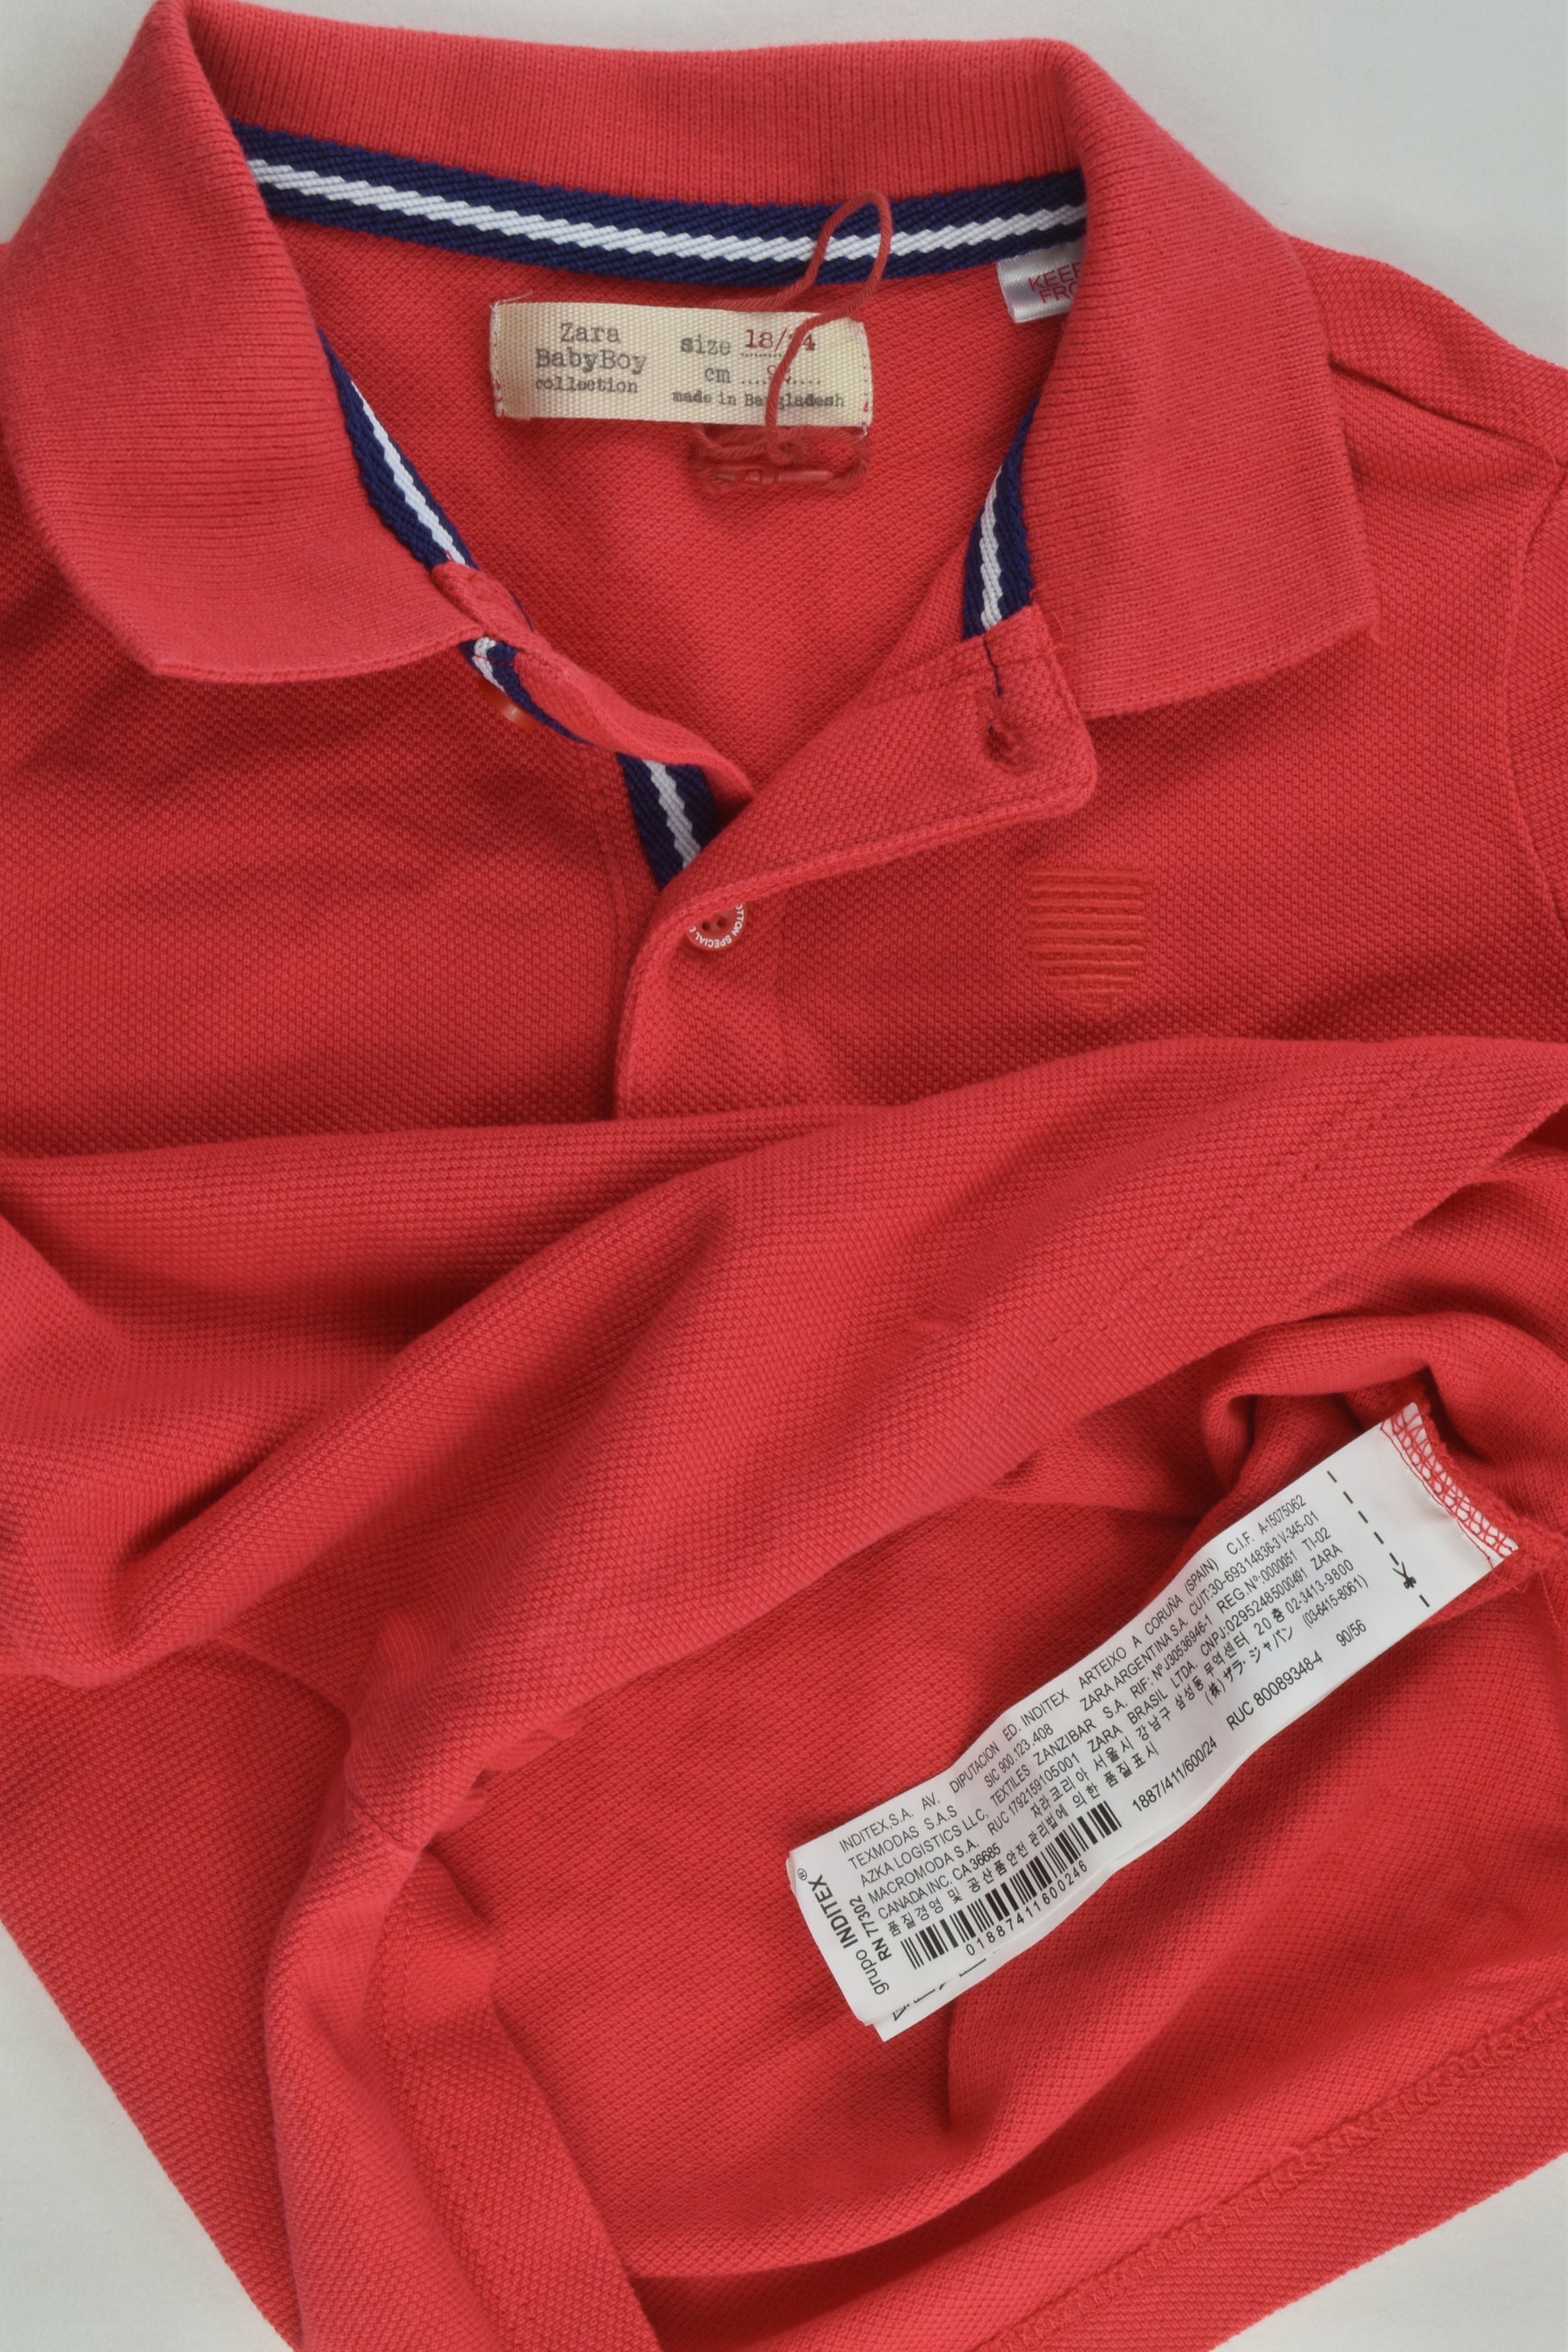 Zara Size 2 (92 cm) Red Polo Shirt